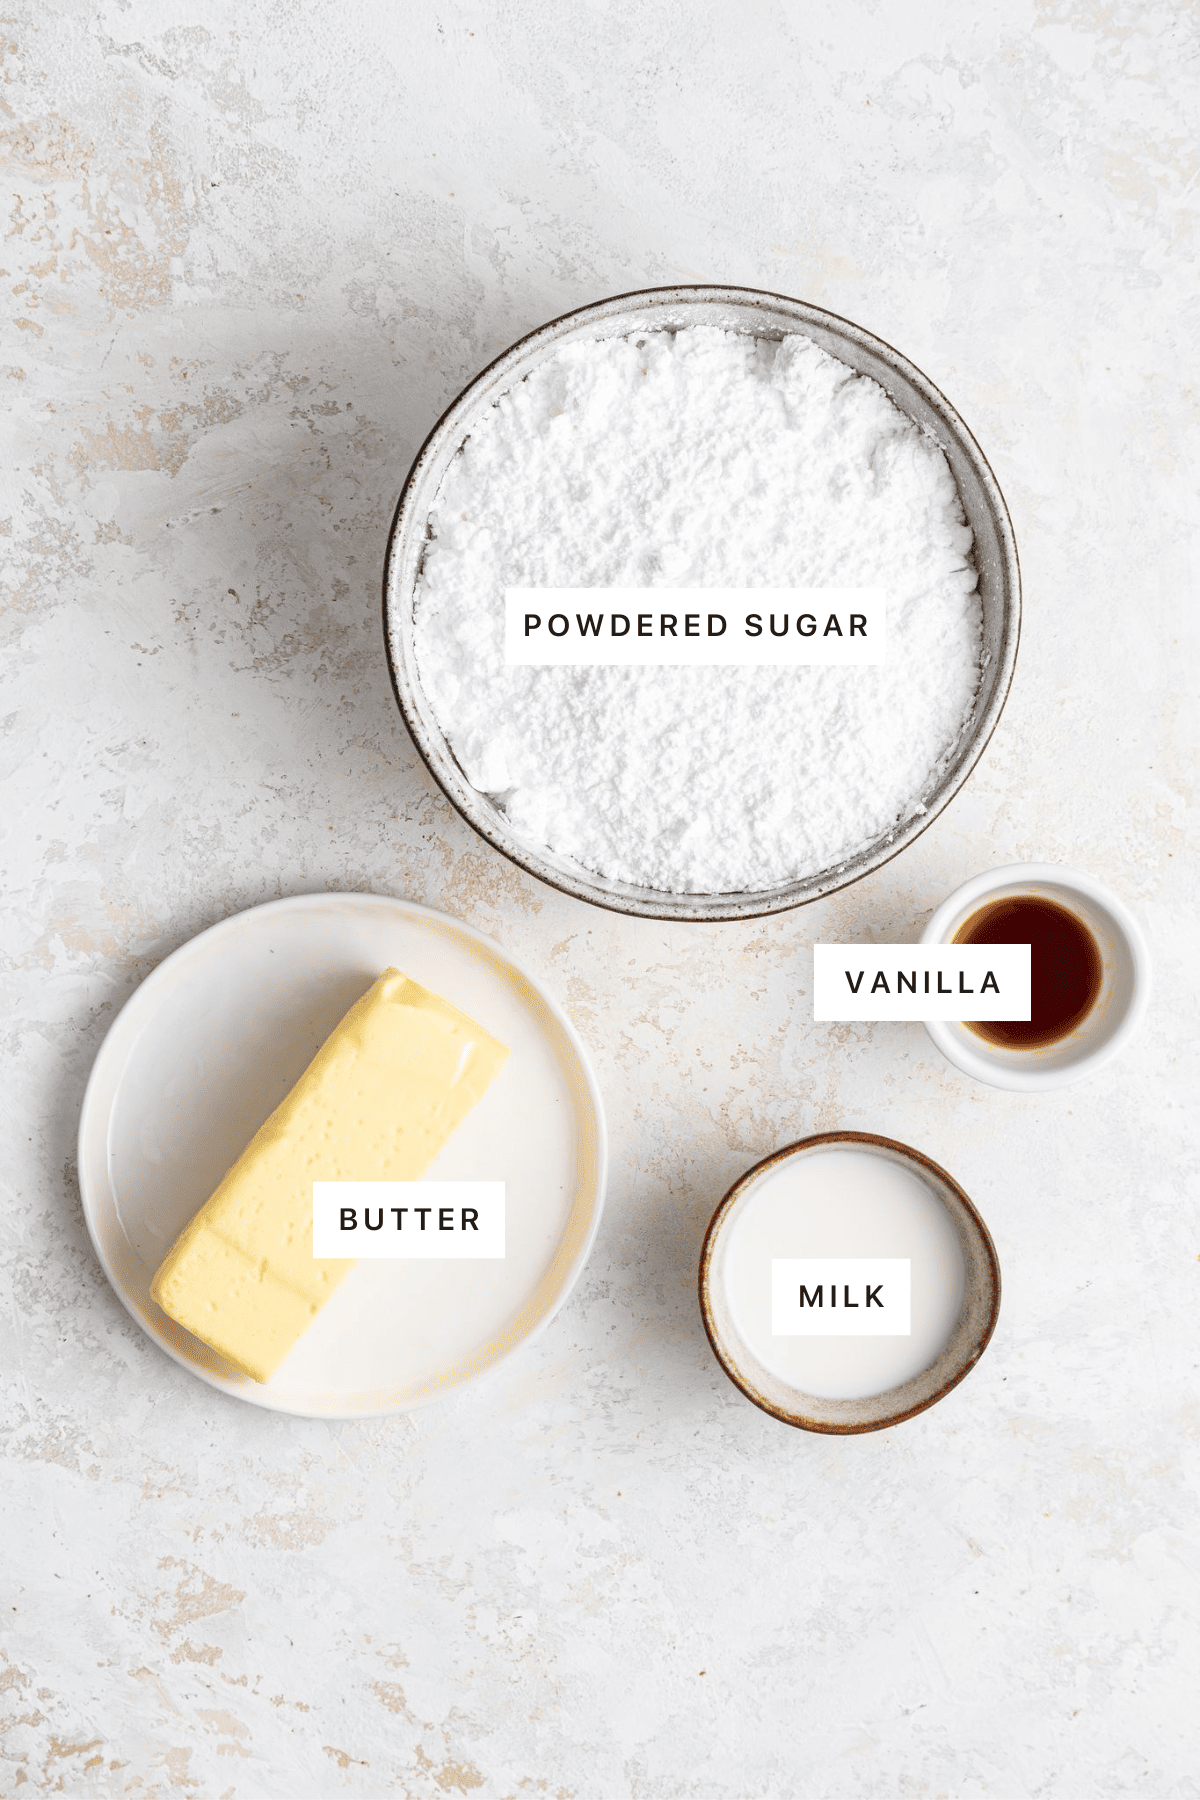 Ingredients for the vanilla buttercream bitumen: butter, milk, vanilla and icing sugar.